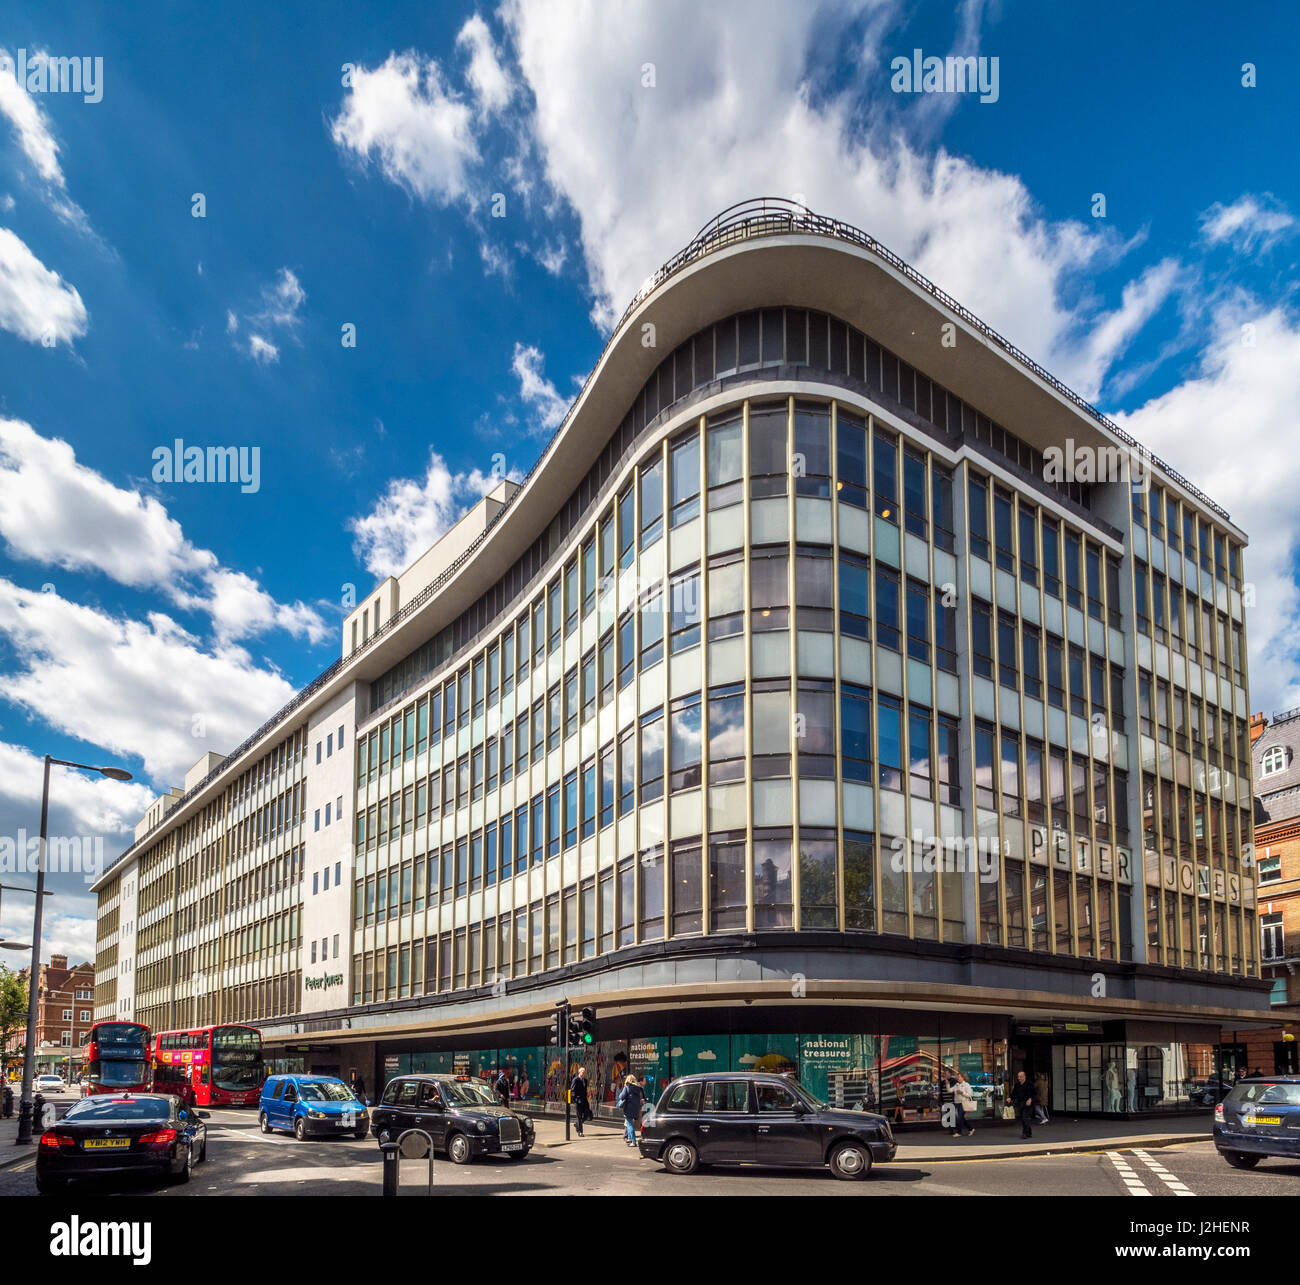 Kaufhaus Peter Jones, Sloane Square, London, UK. Stockfoto